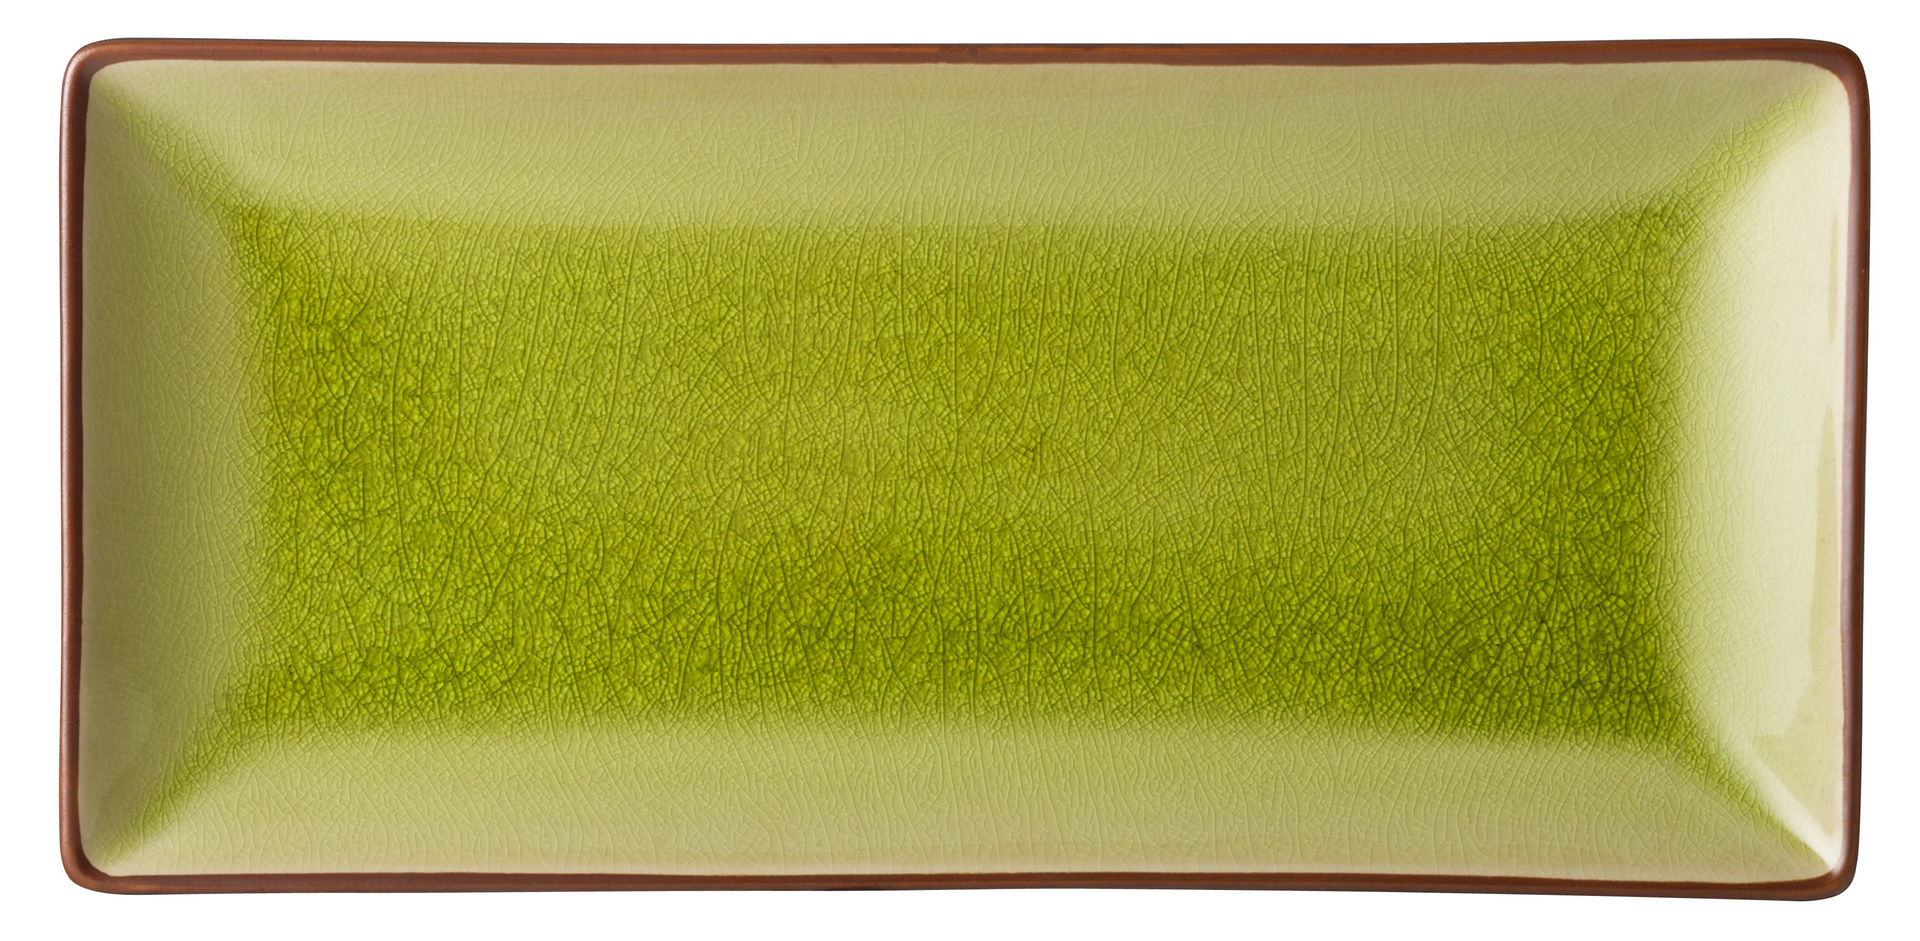 Verdi Rectangular Plate 11.5 x 5.5